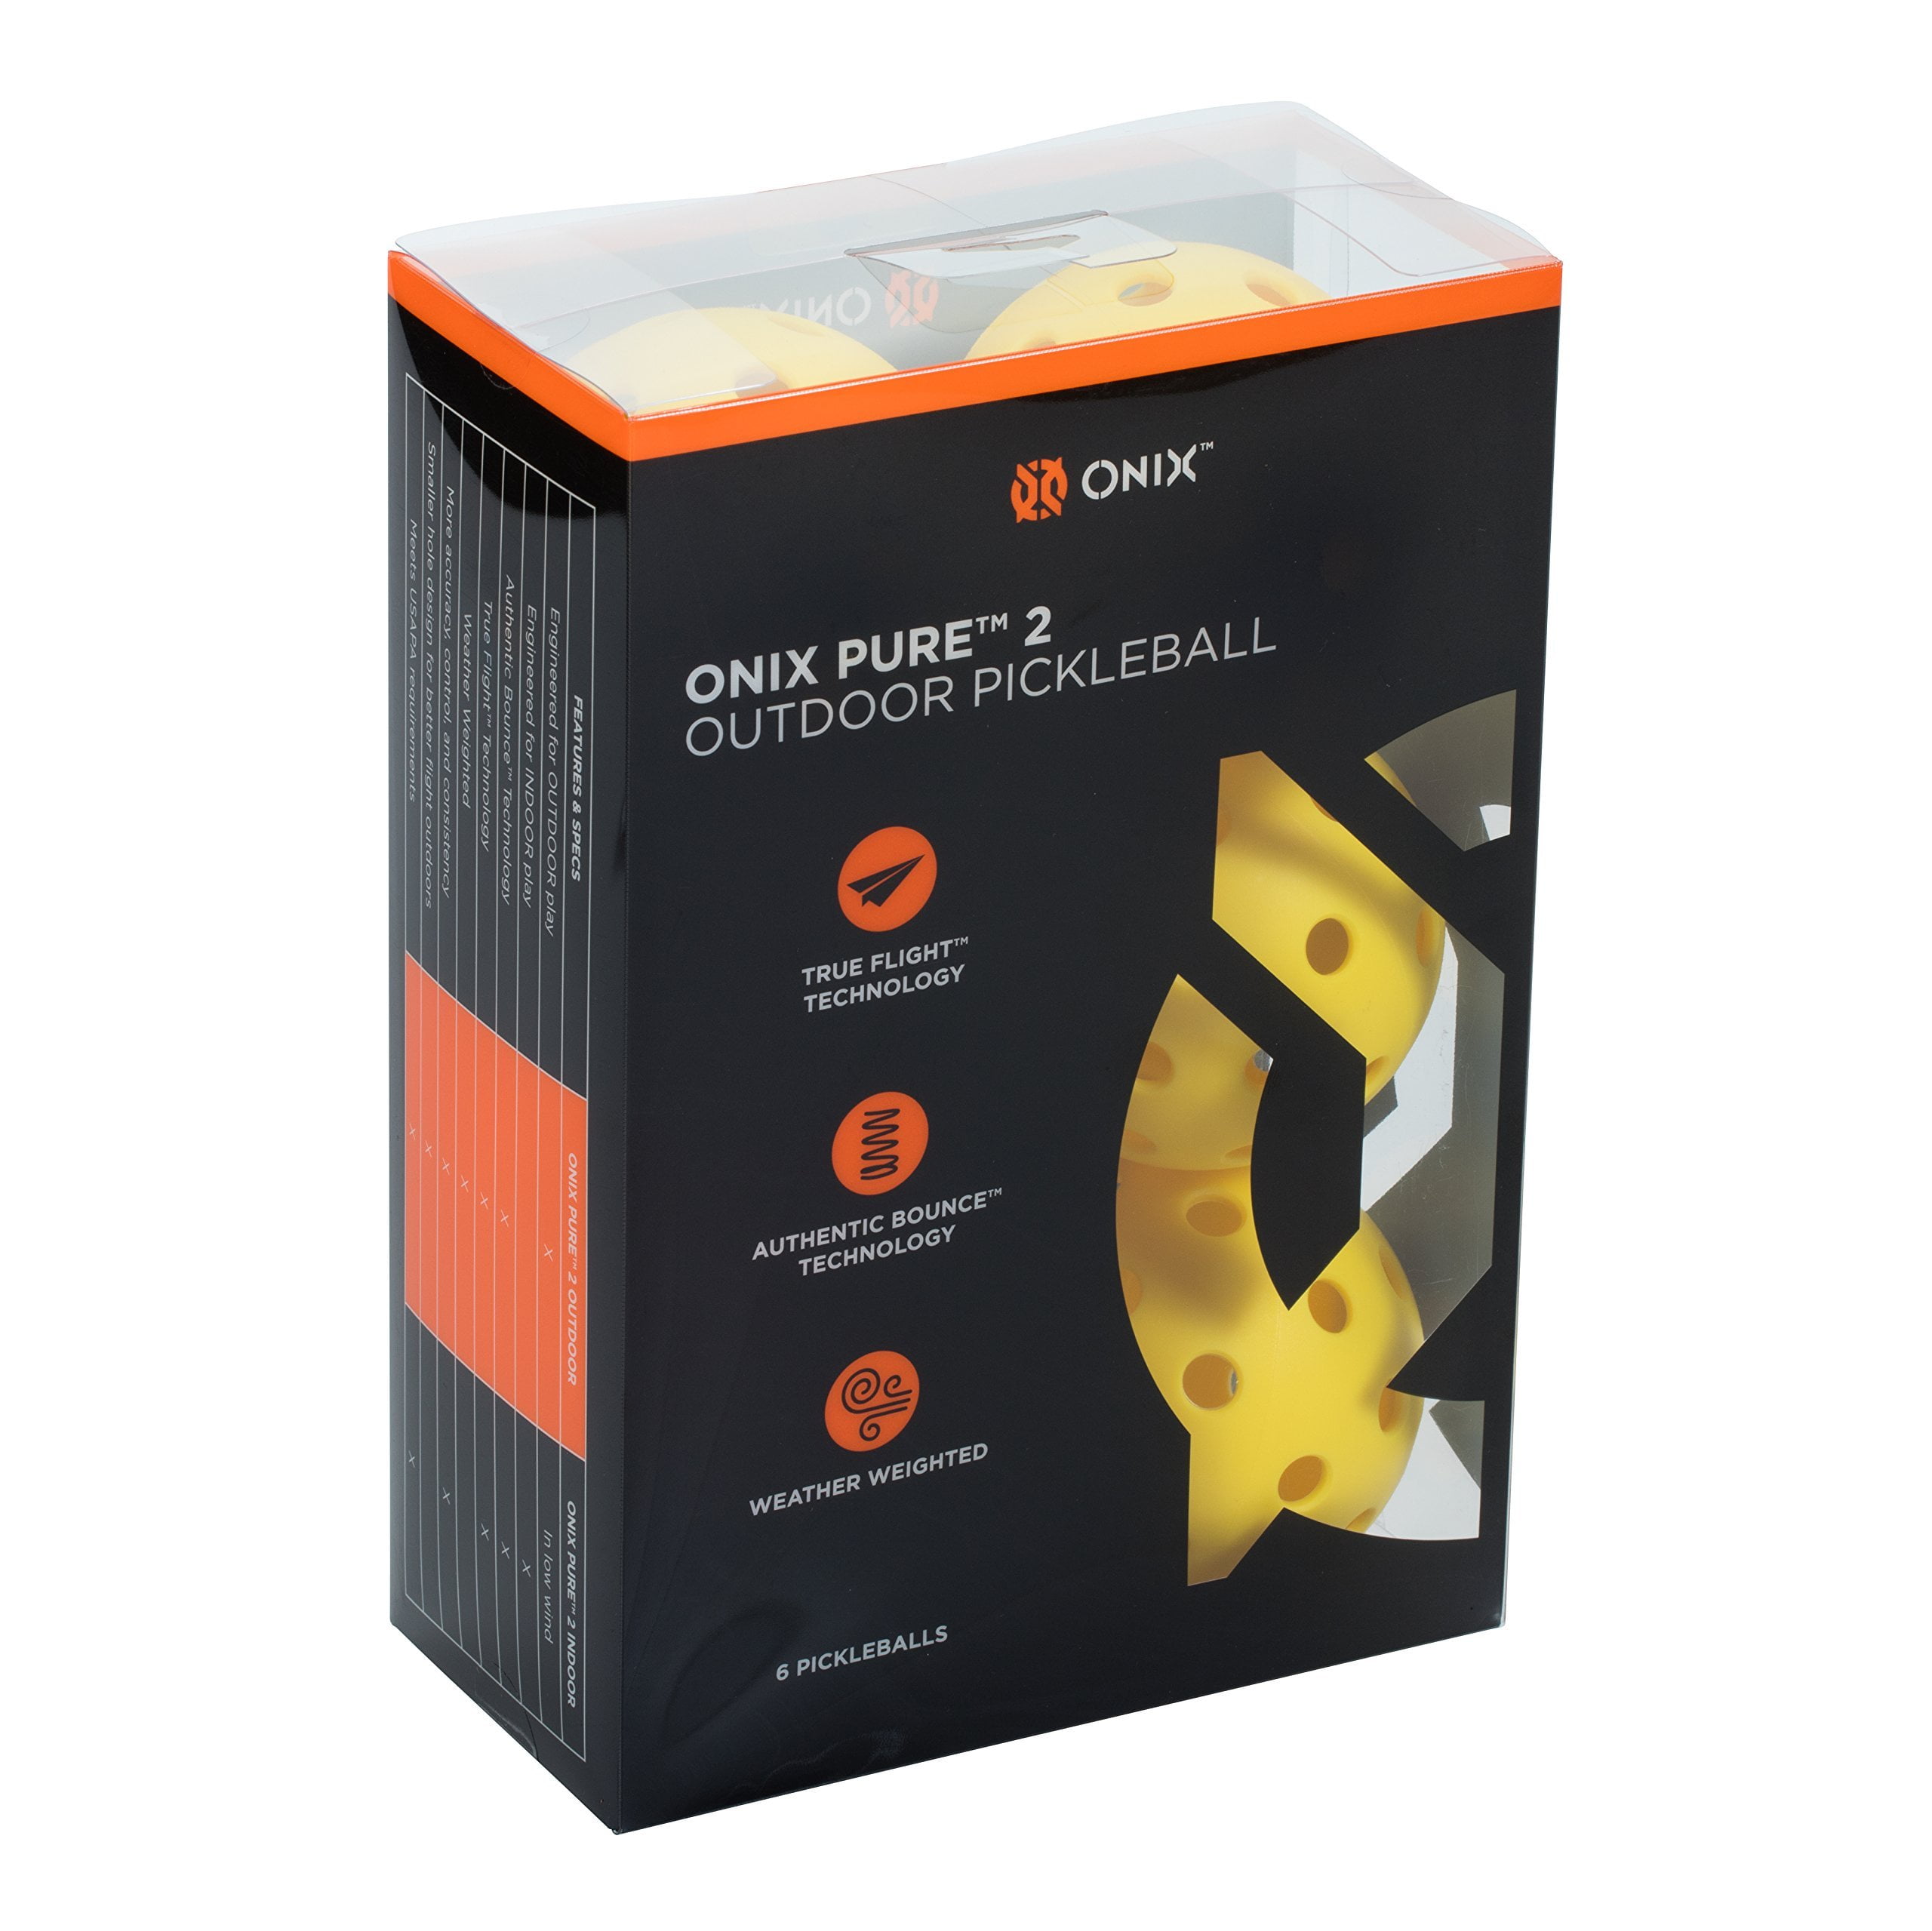 6 Onix Pure2 Pickleball Balls Outdoor  Pure  Set of 6 